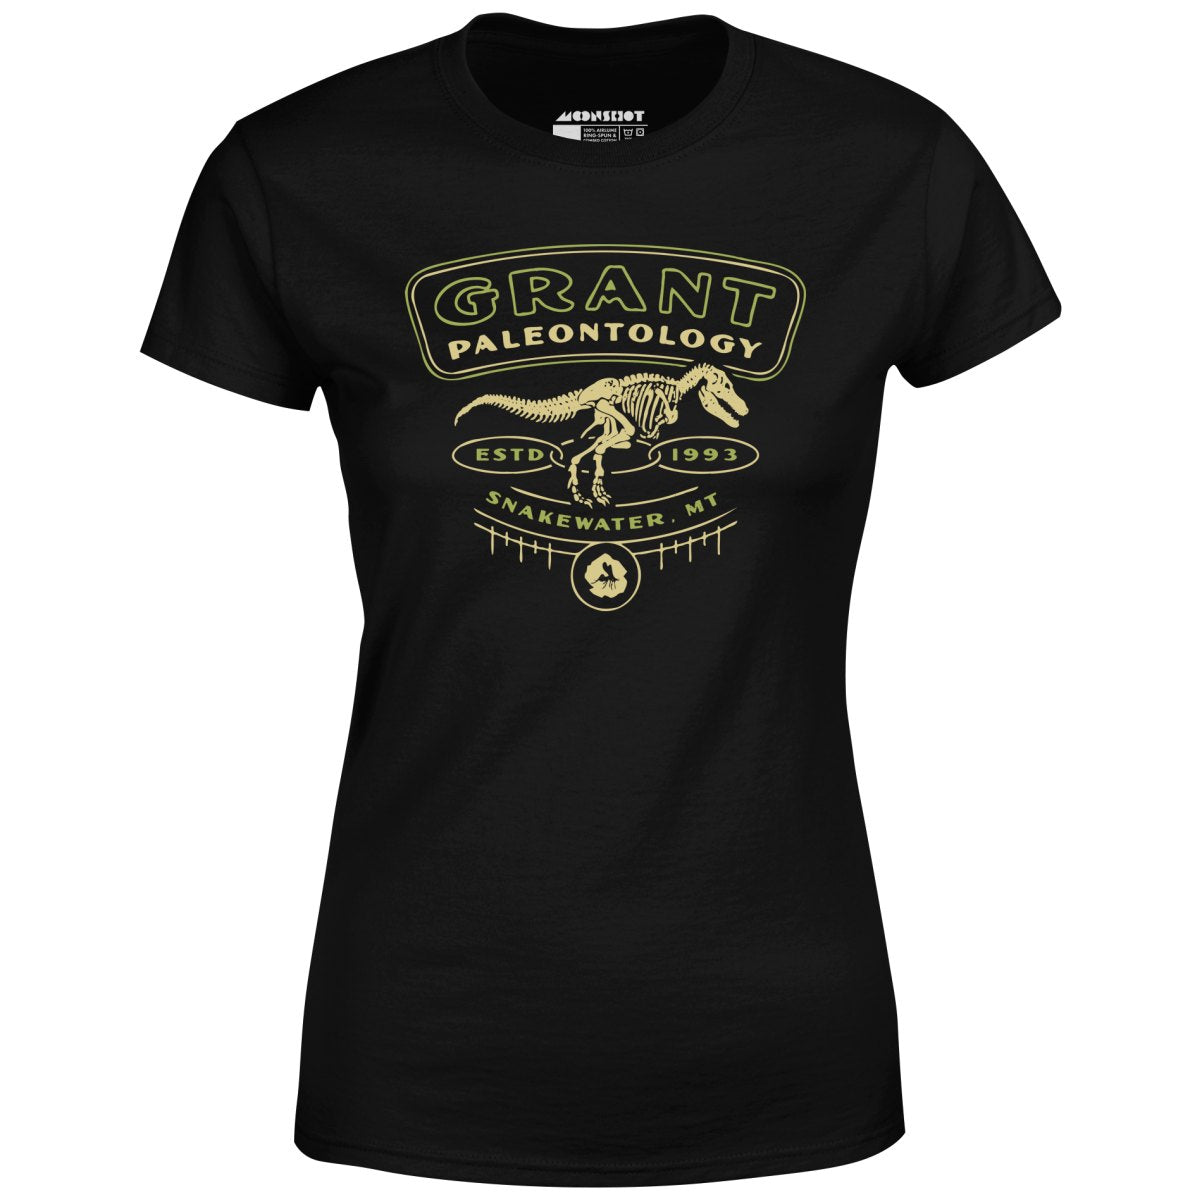 Grant Paleontology - Women's T-Shirt